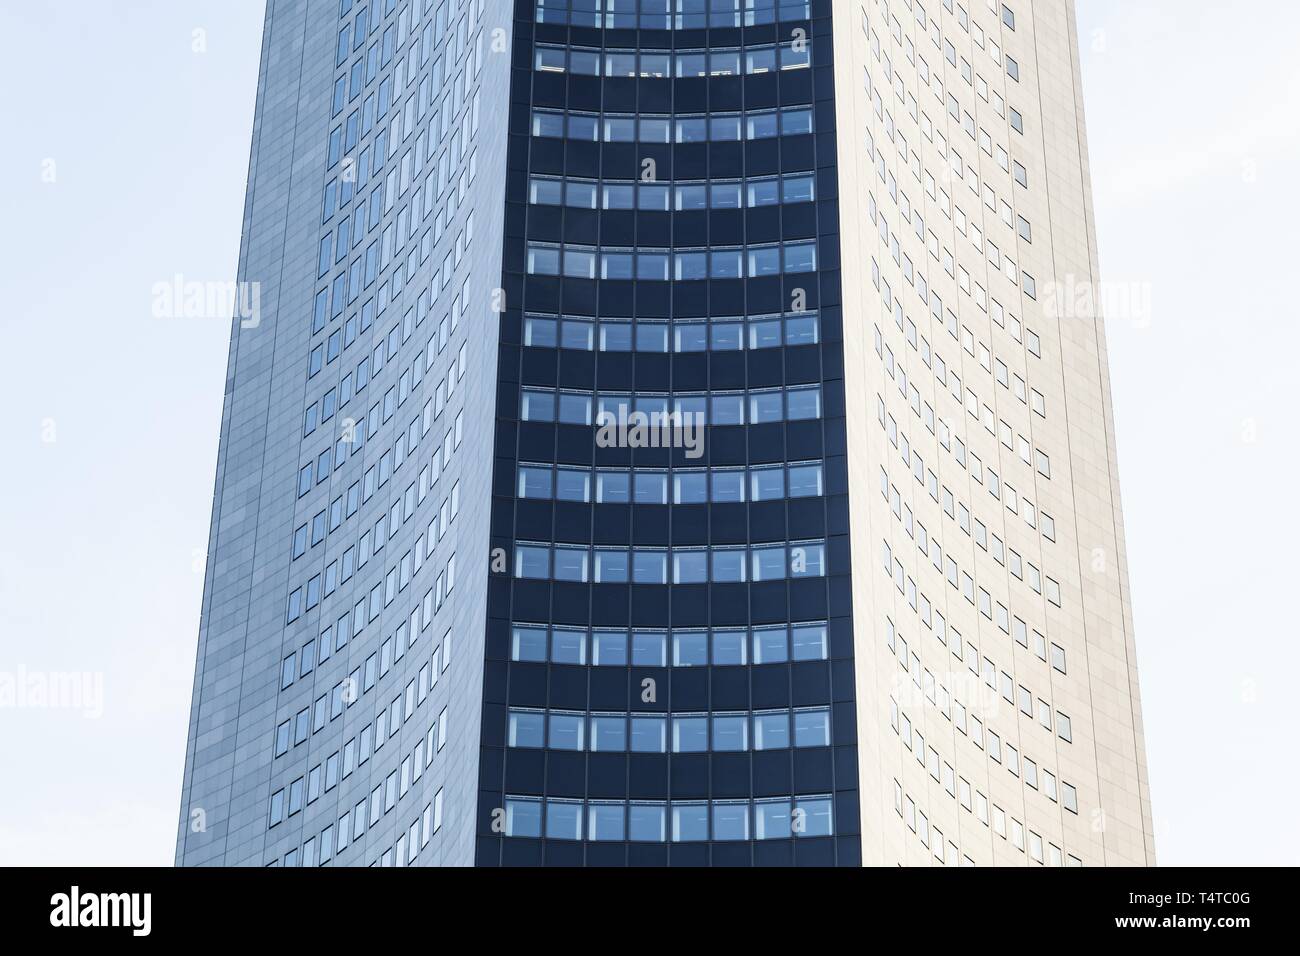 Architecture, office building, Leipzig, Saxony, Germany, Europe Stock Photo